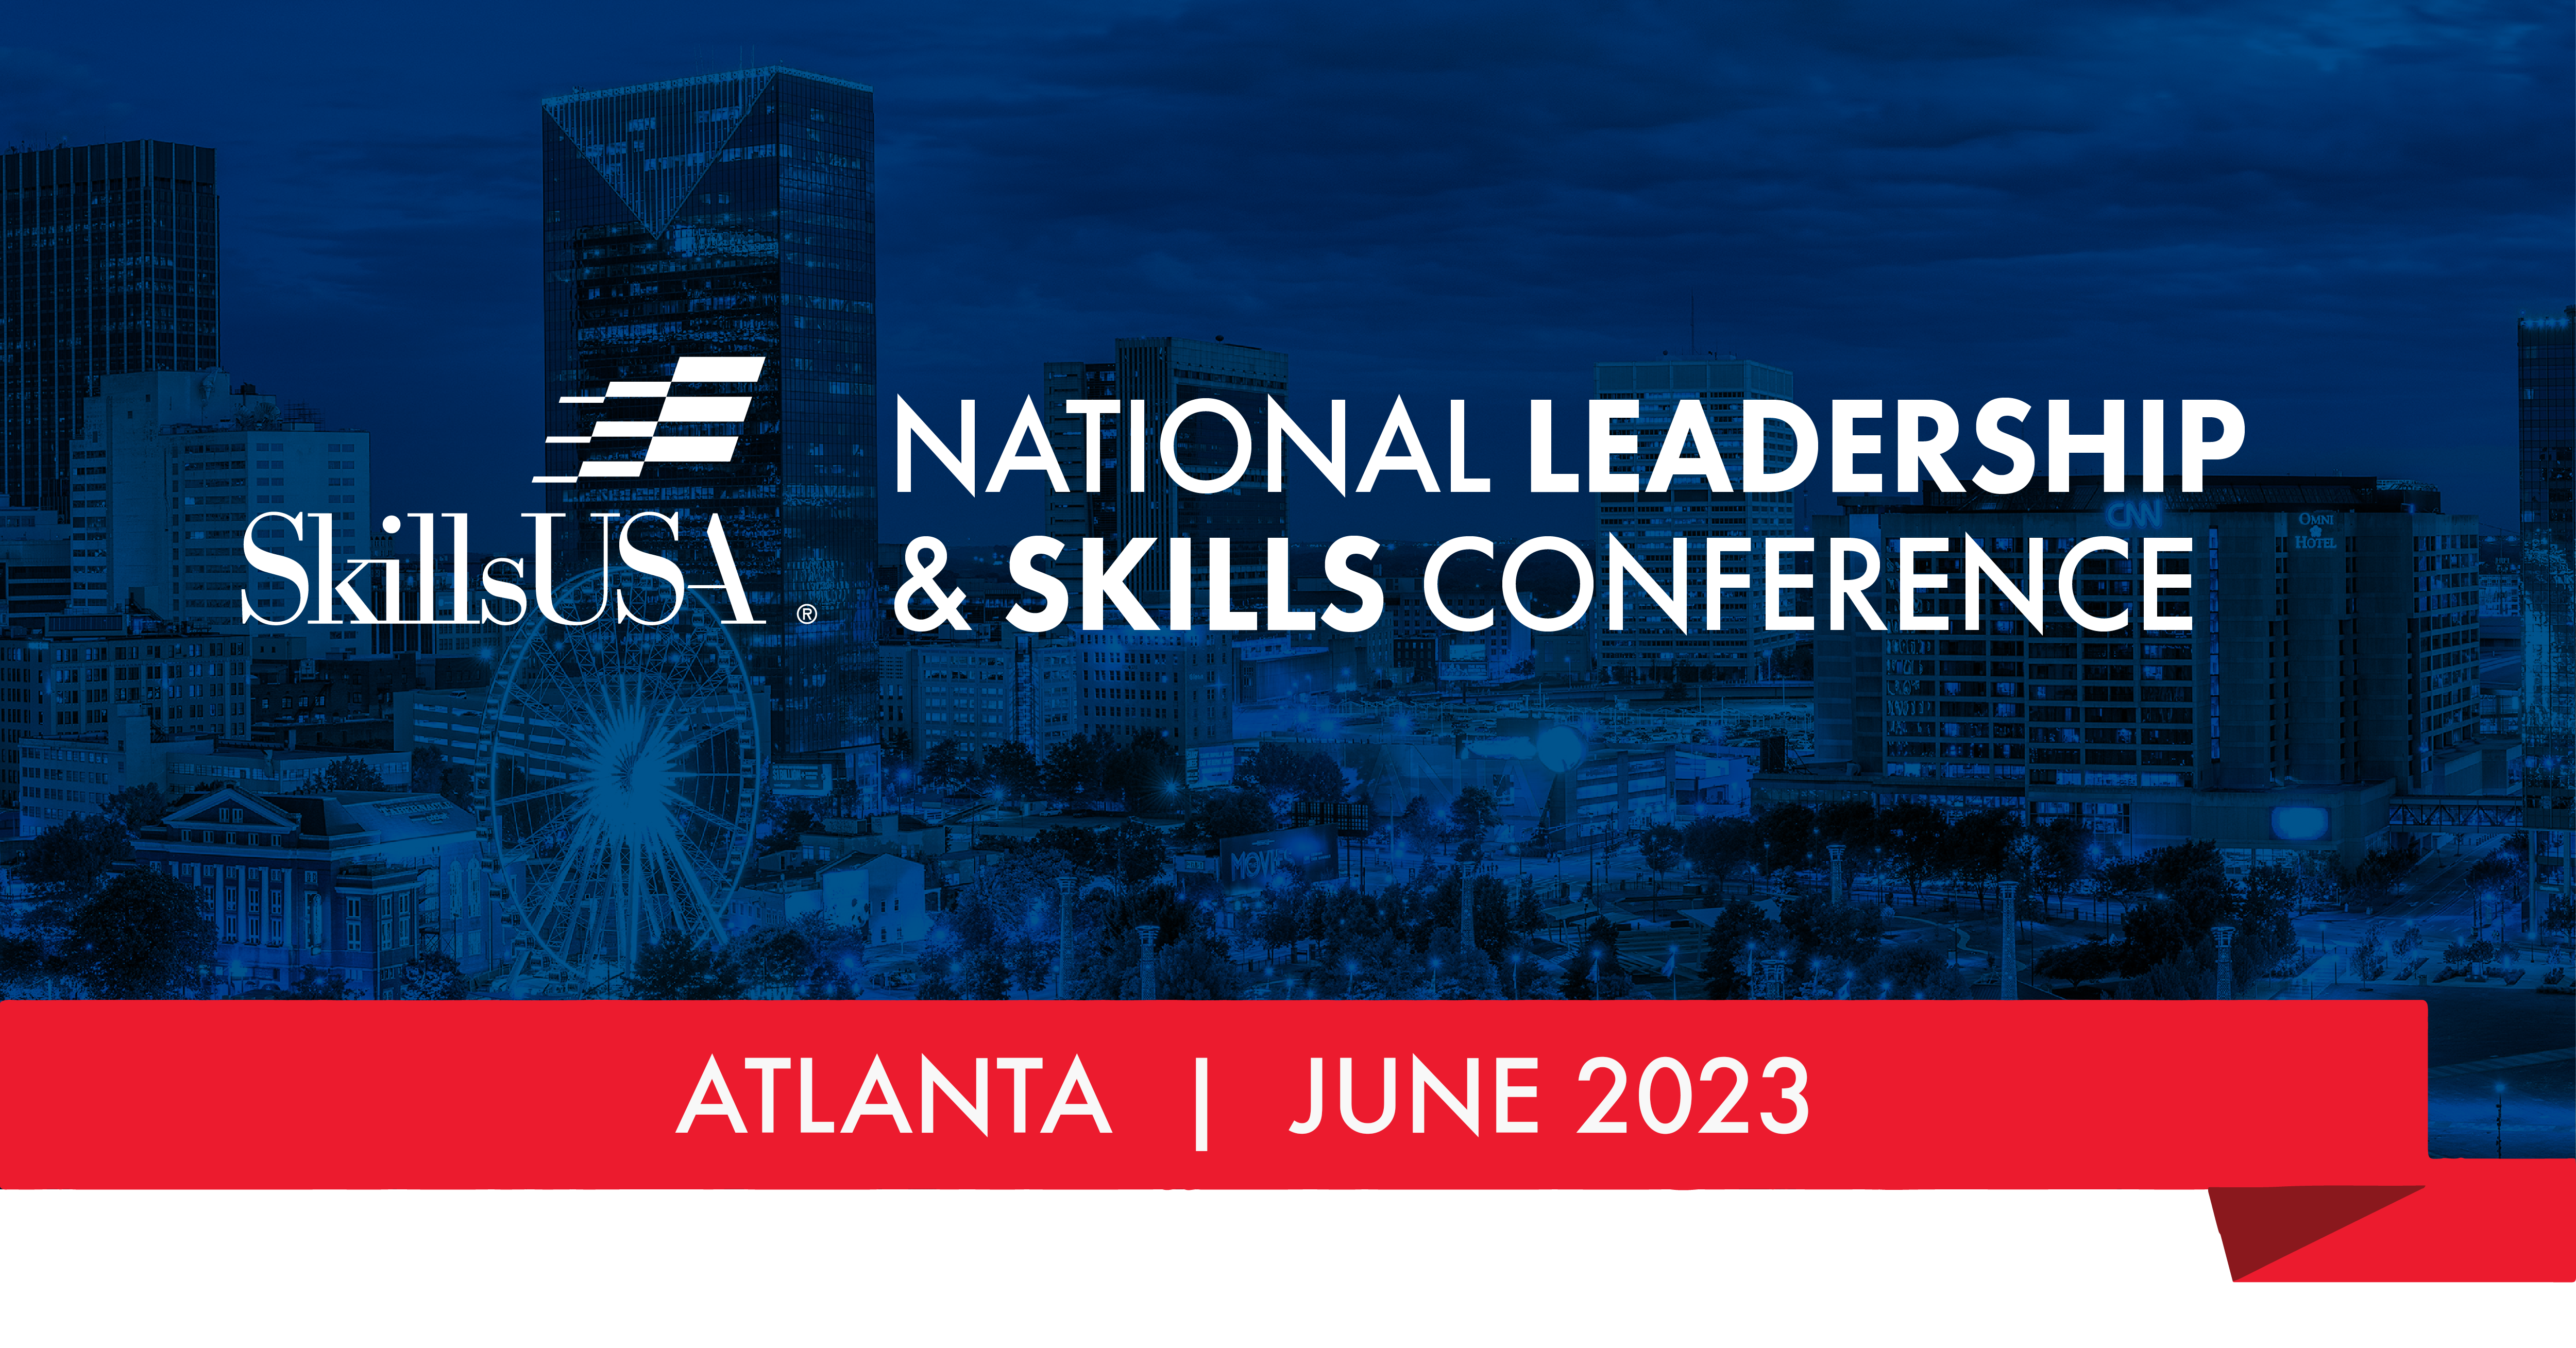 NRCA - National Leadership & Skills Conference NEW